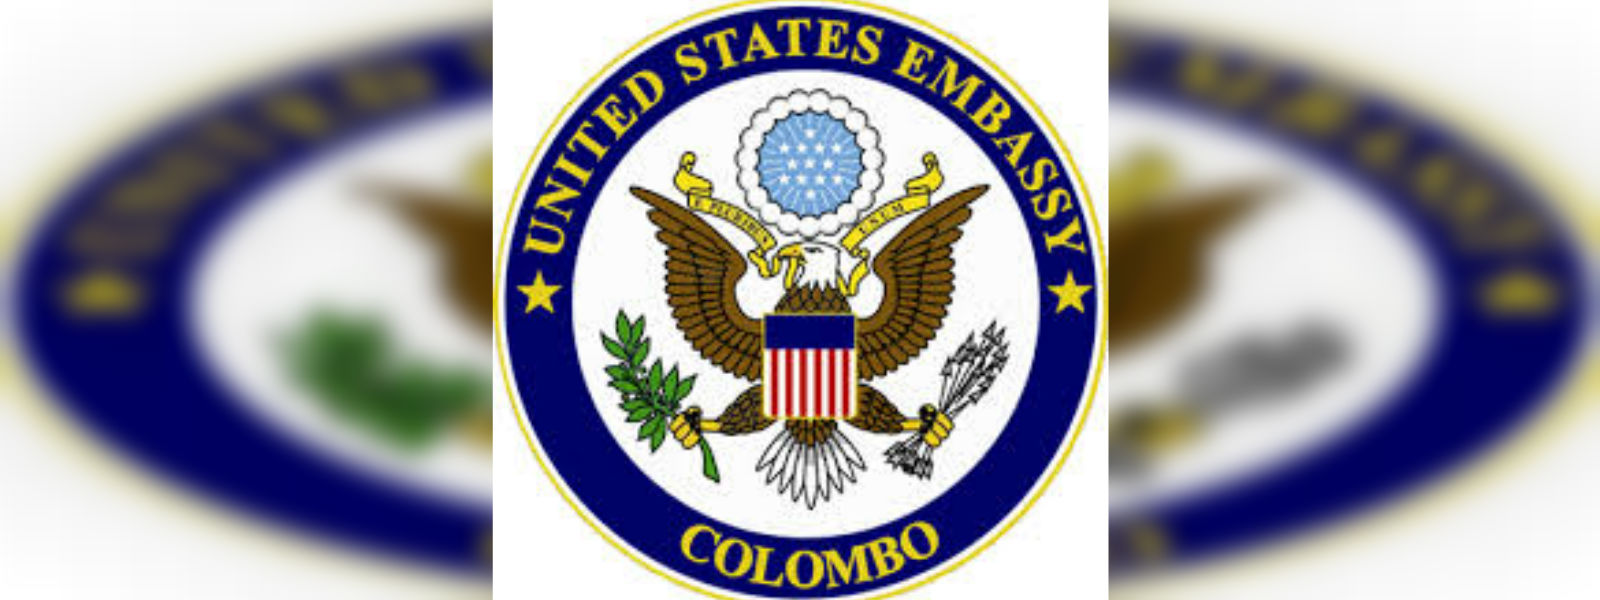 No US Army Base in Sri Lanka-Embassy spokesperson